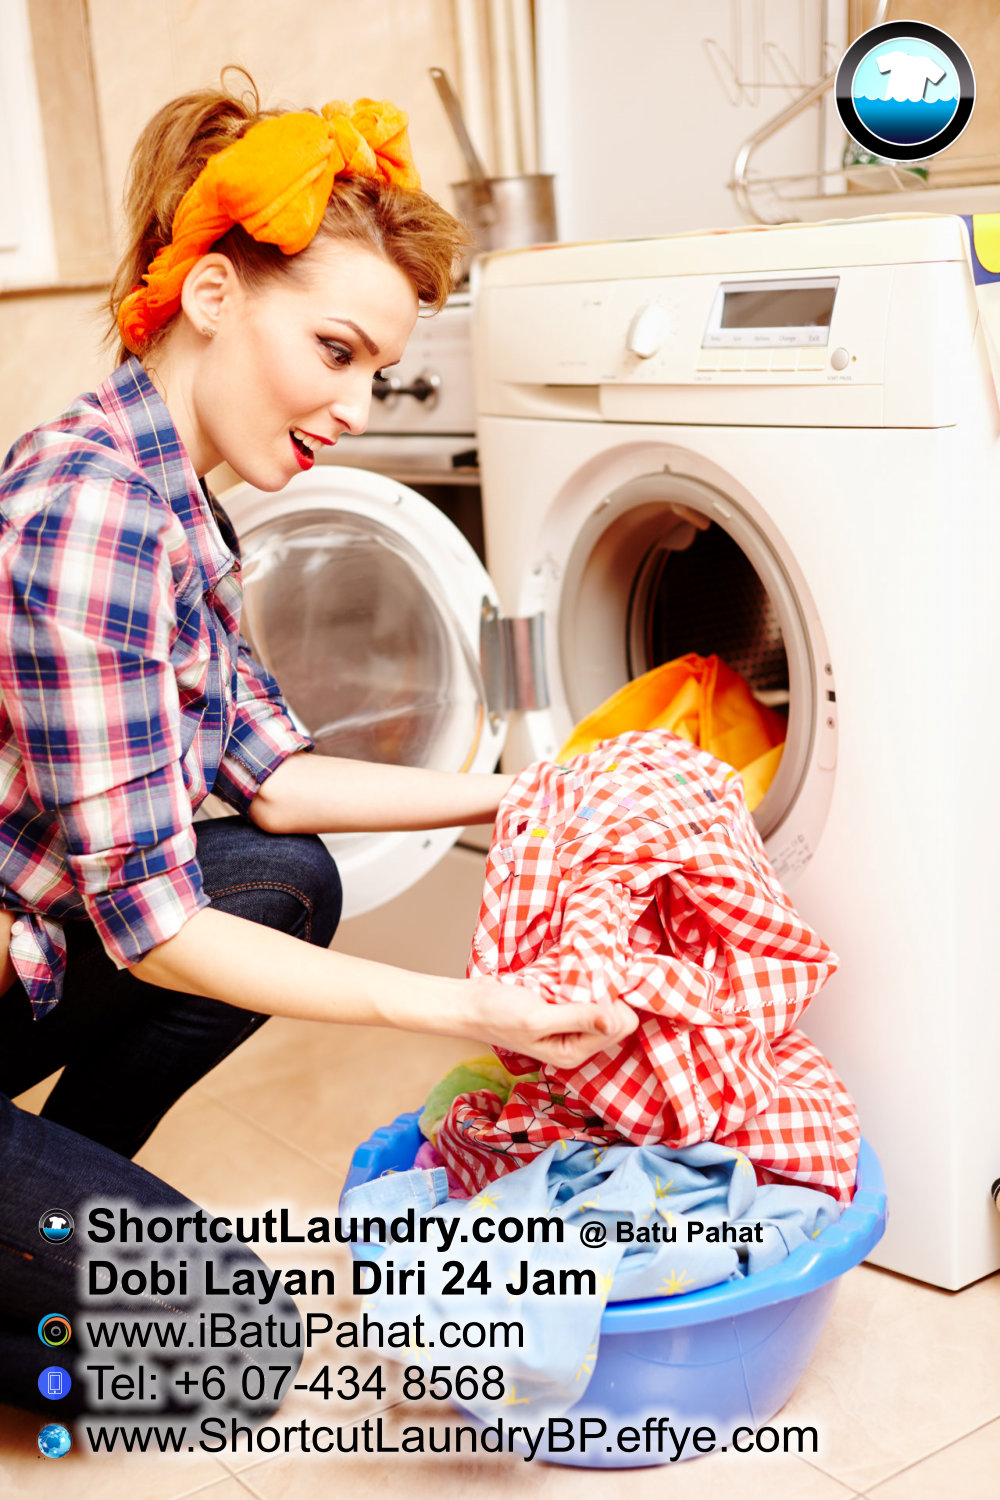 batu-pahat-laundry-shortcut-laundry-24-hours-self-service-laundry-bp-batu-pahat-dobi-layan-diri-24-jam-%e5%b3%87%e6%a0%aa%e5%b7%b4%e8%be%96%e8%87%aa%e5%8a%a9%e6%b4%97%e8%a1%a3%e5%ba%97-washers-and-dry